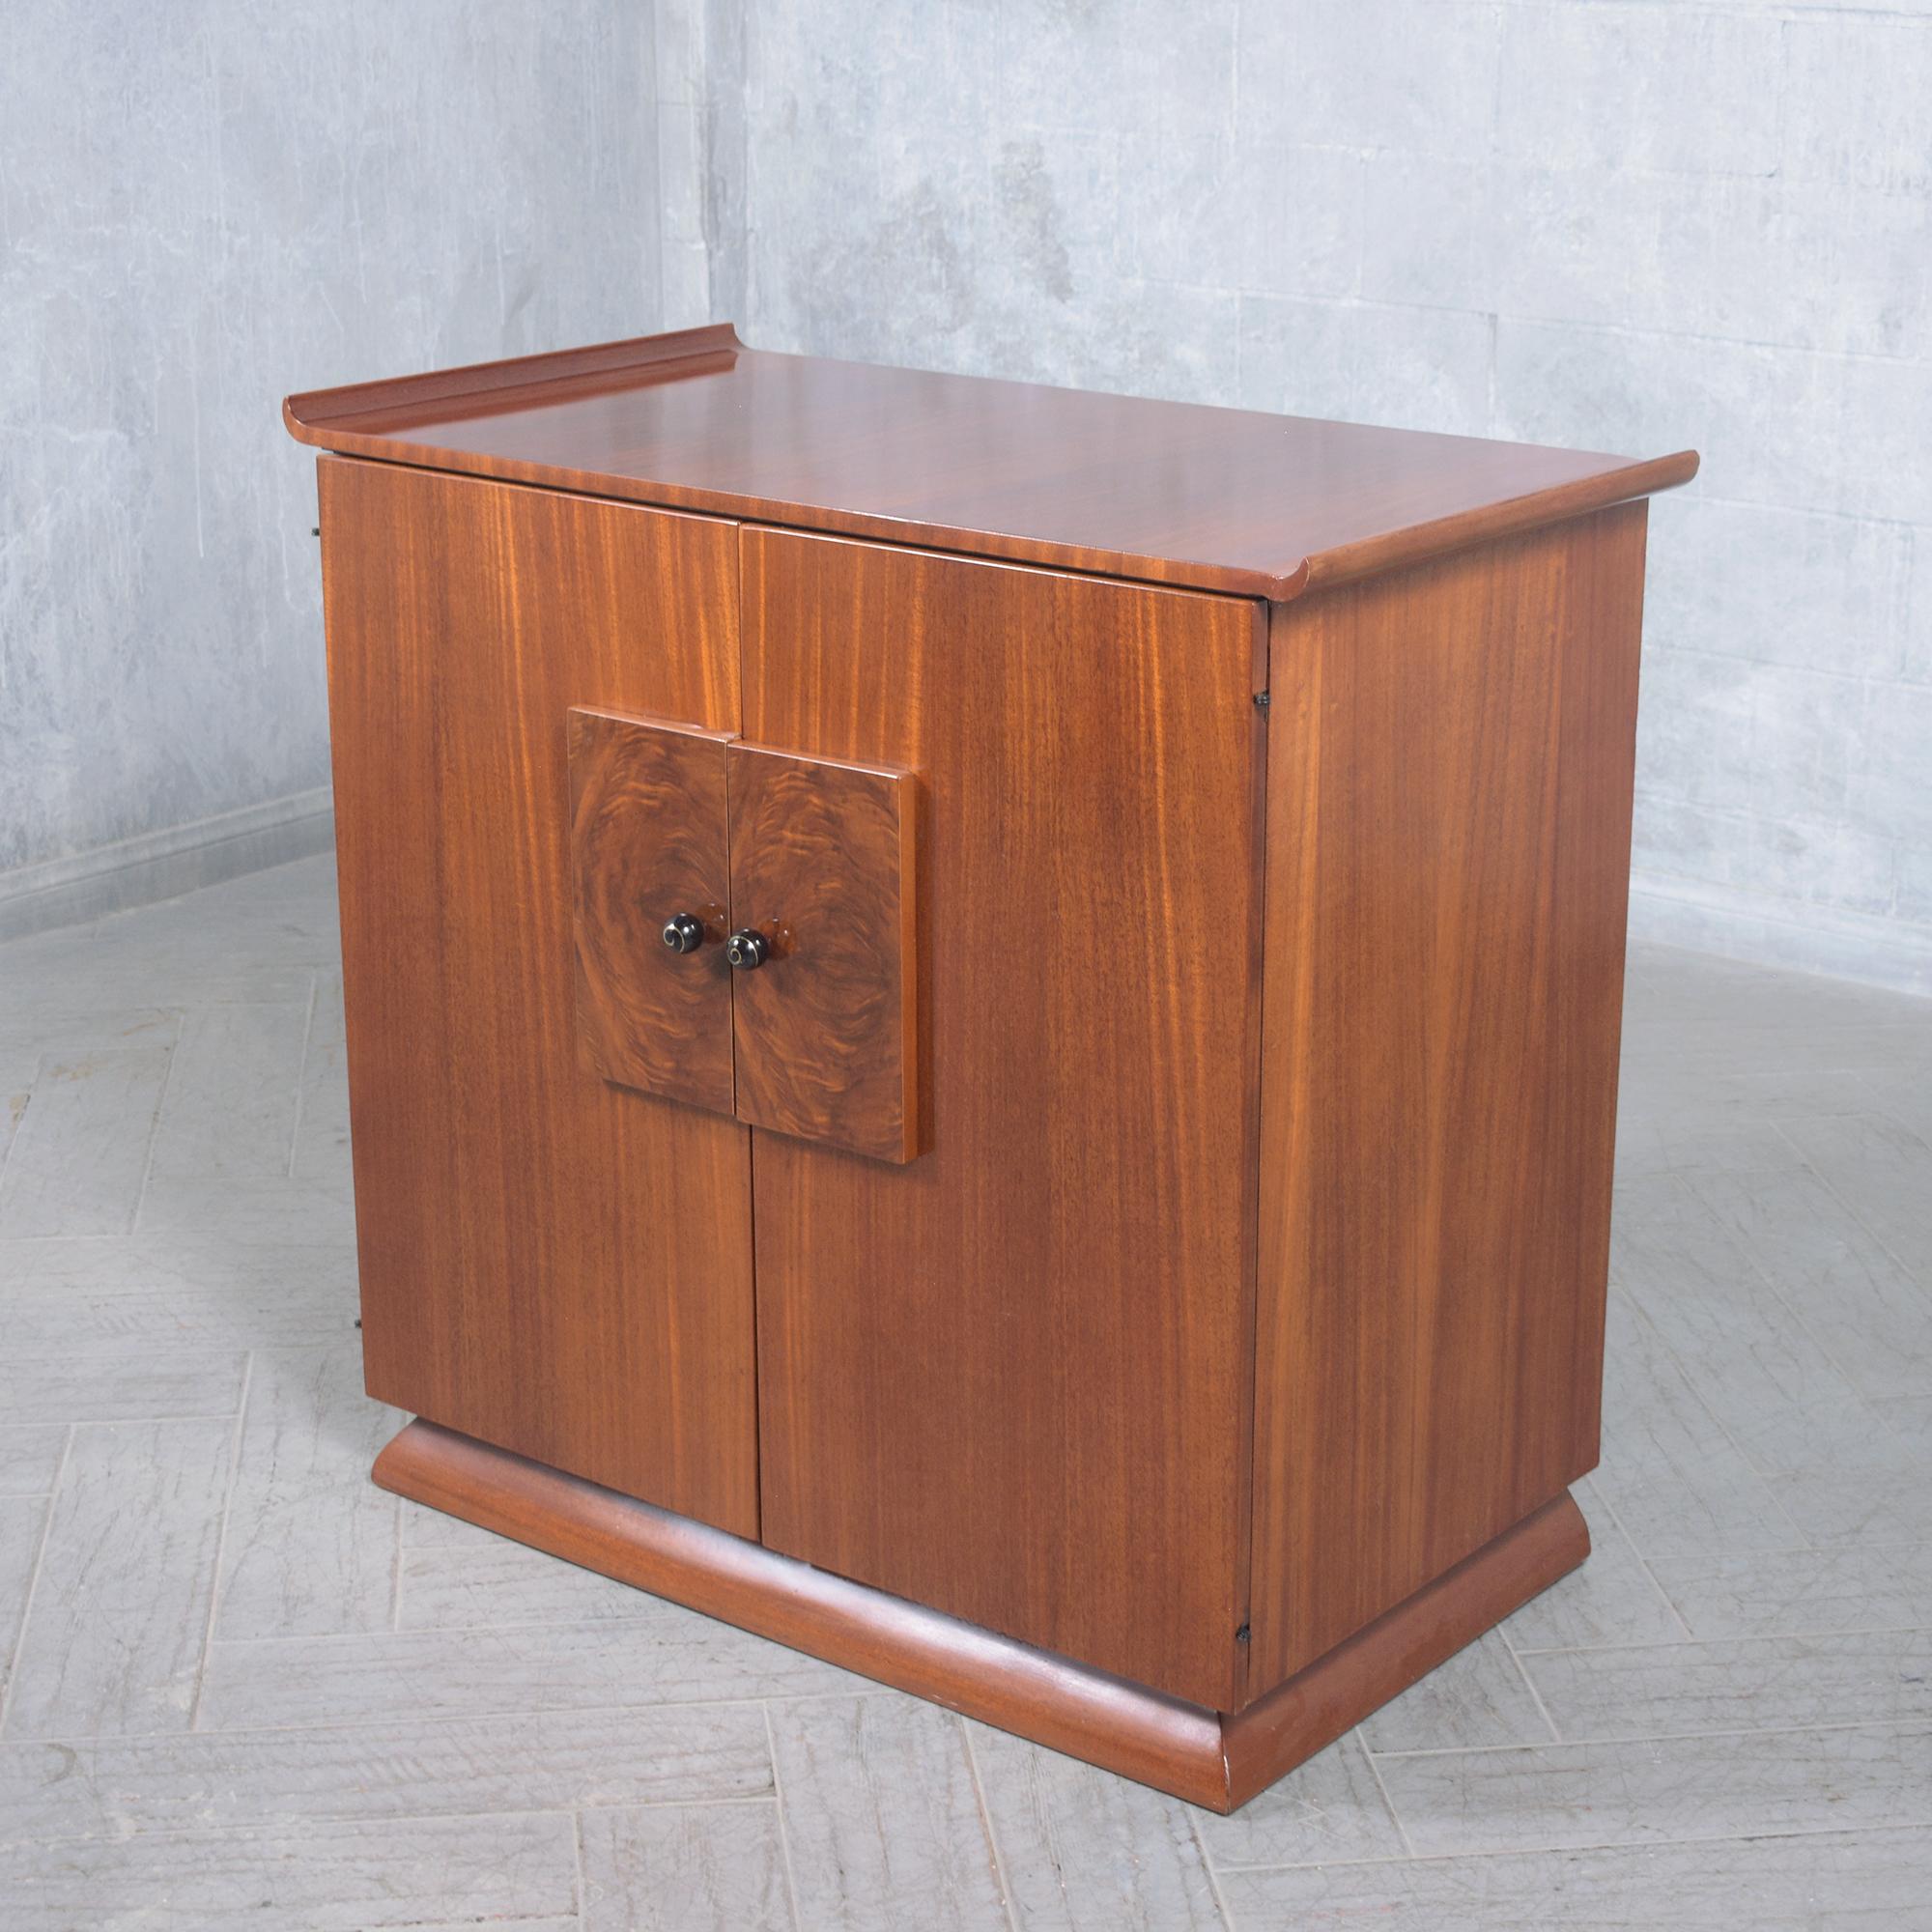 Polished Restored Vintage Mid-Century Wood Cabinet with Burl Door Details For Sale